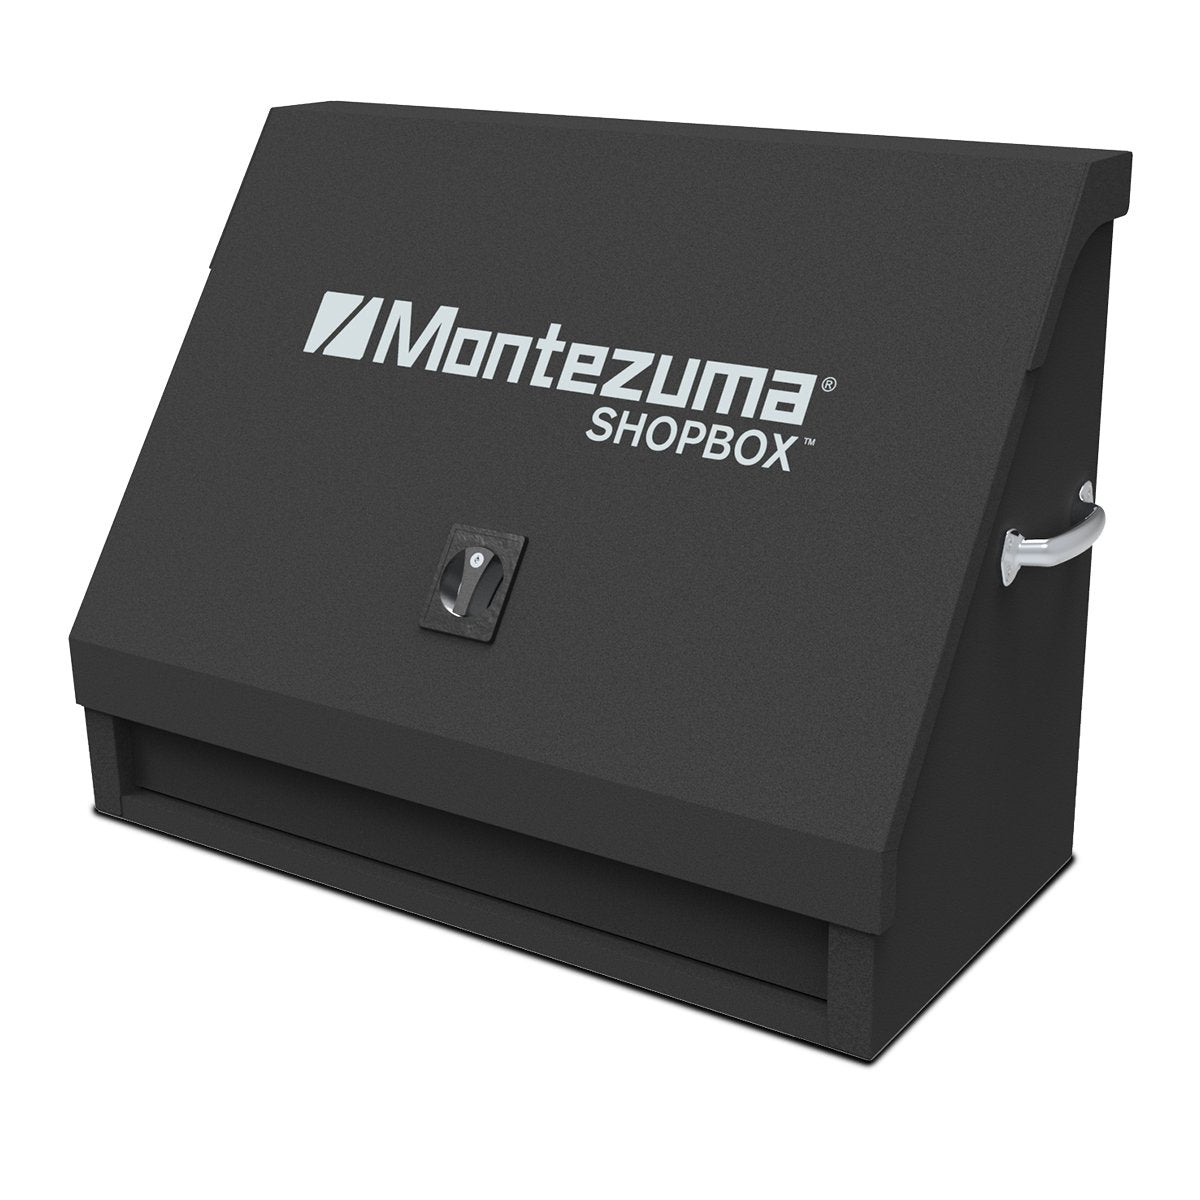 Montezuma triangle shopbox, tool box for indoor use